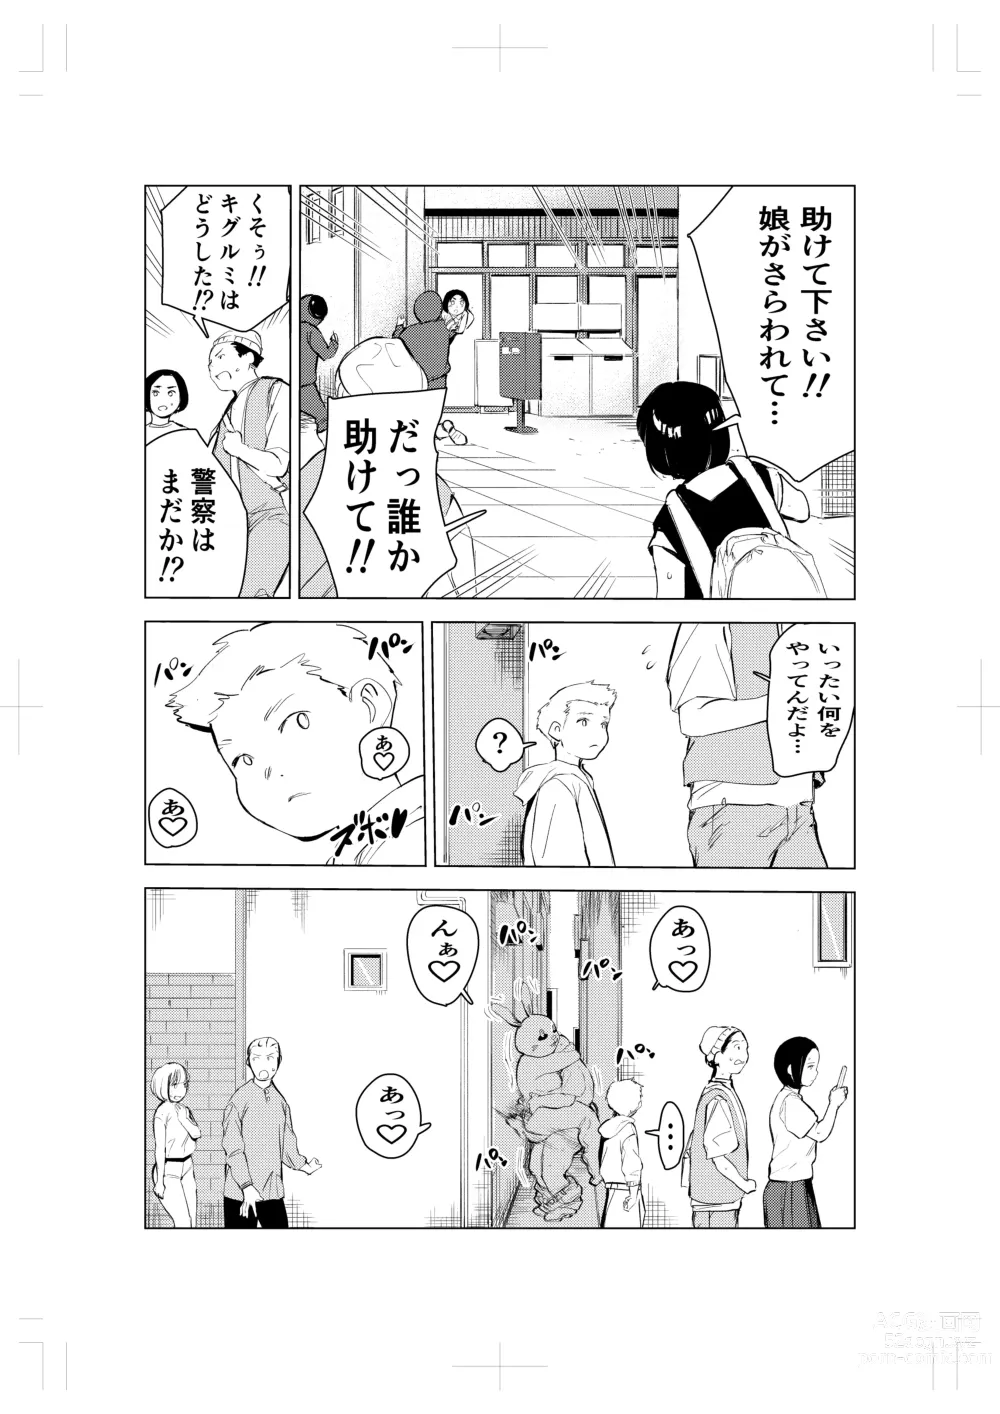 Page 35 of doujinshi Kigurumi niku manjū